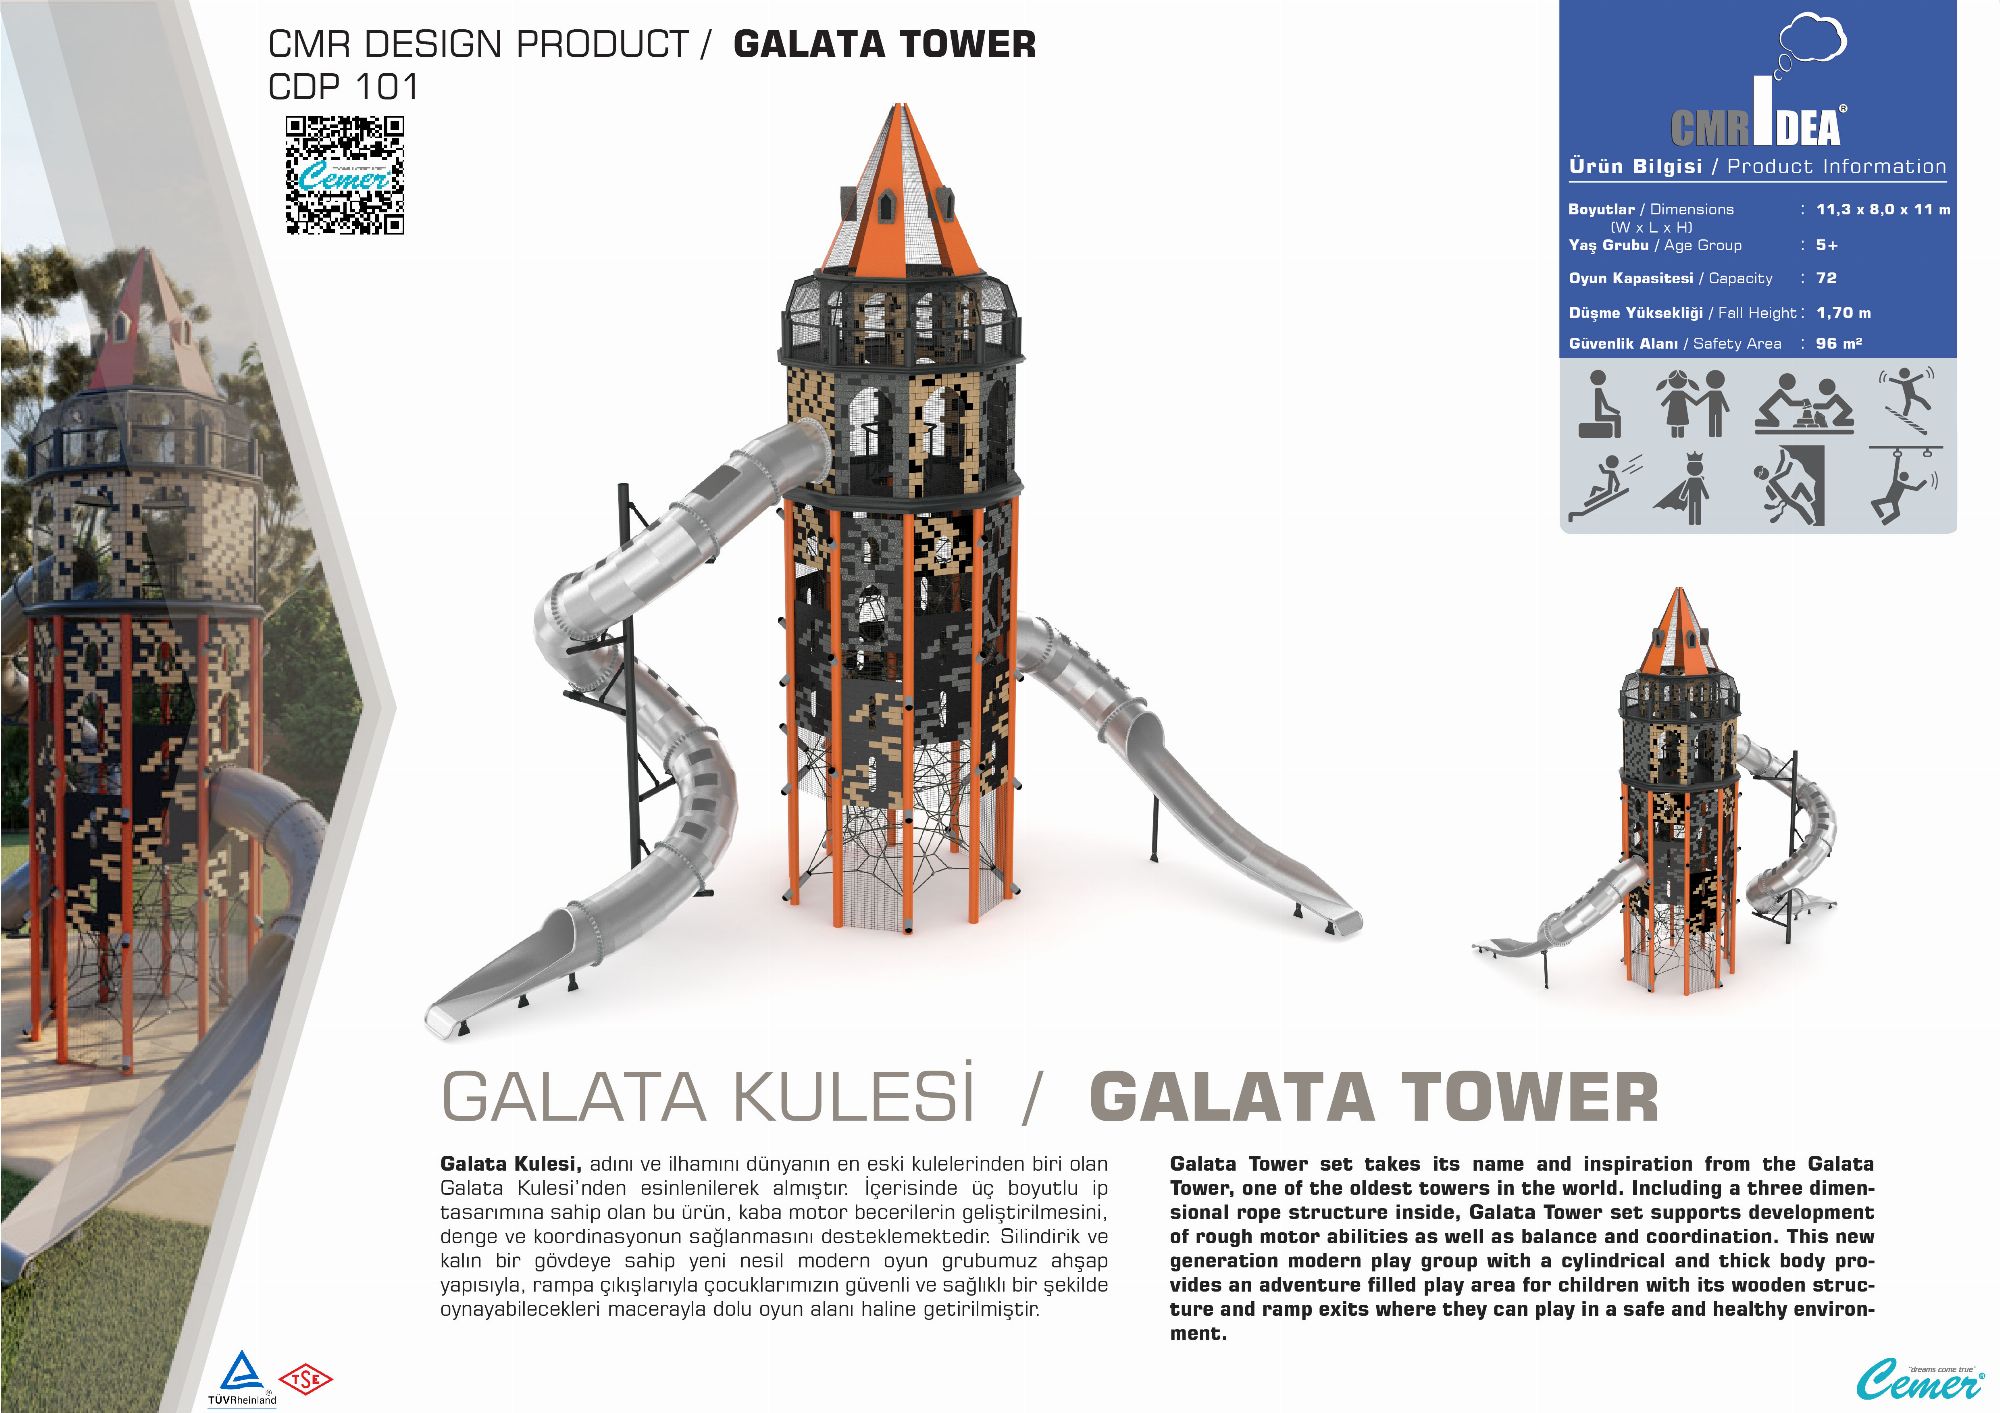 cdp-101---galata-tower-tse-cdp-101---galata-tower-1.jpg